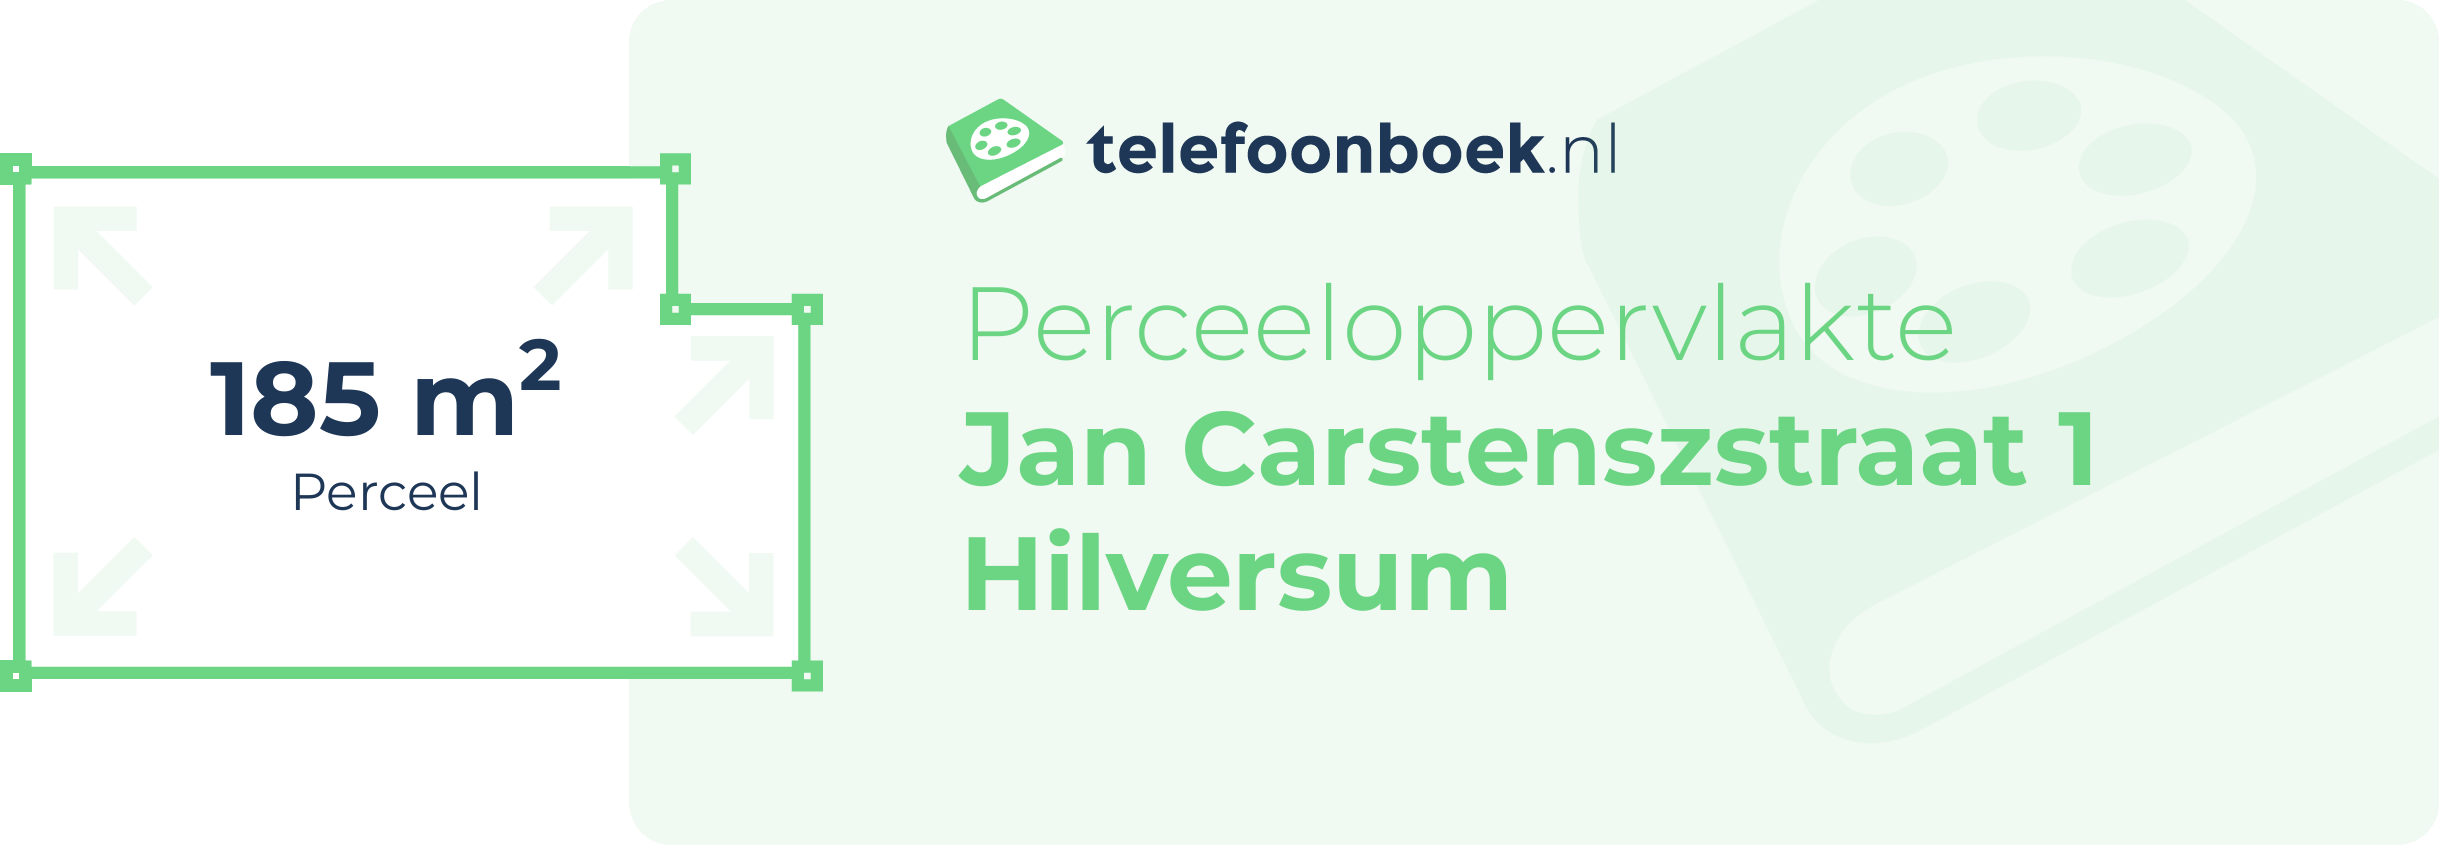 Perceeloppervlakte Jan Carstenszstraat 1 Hilversum